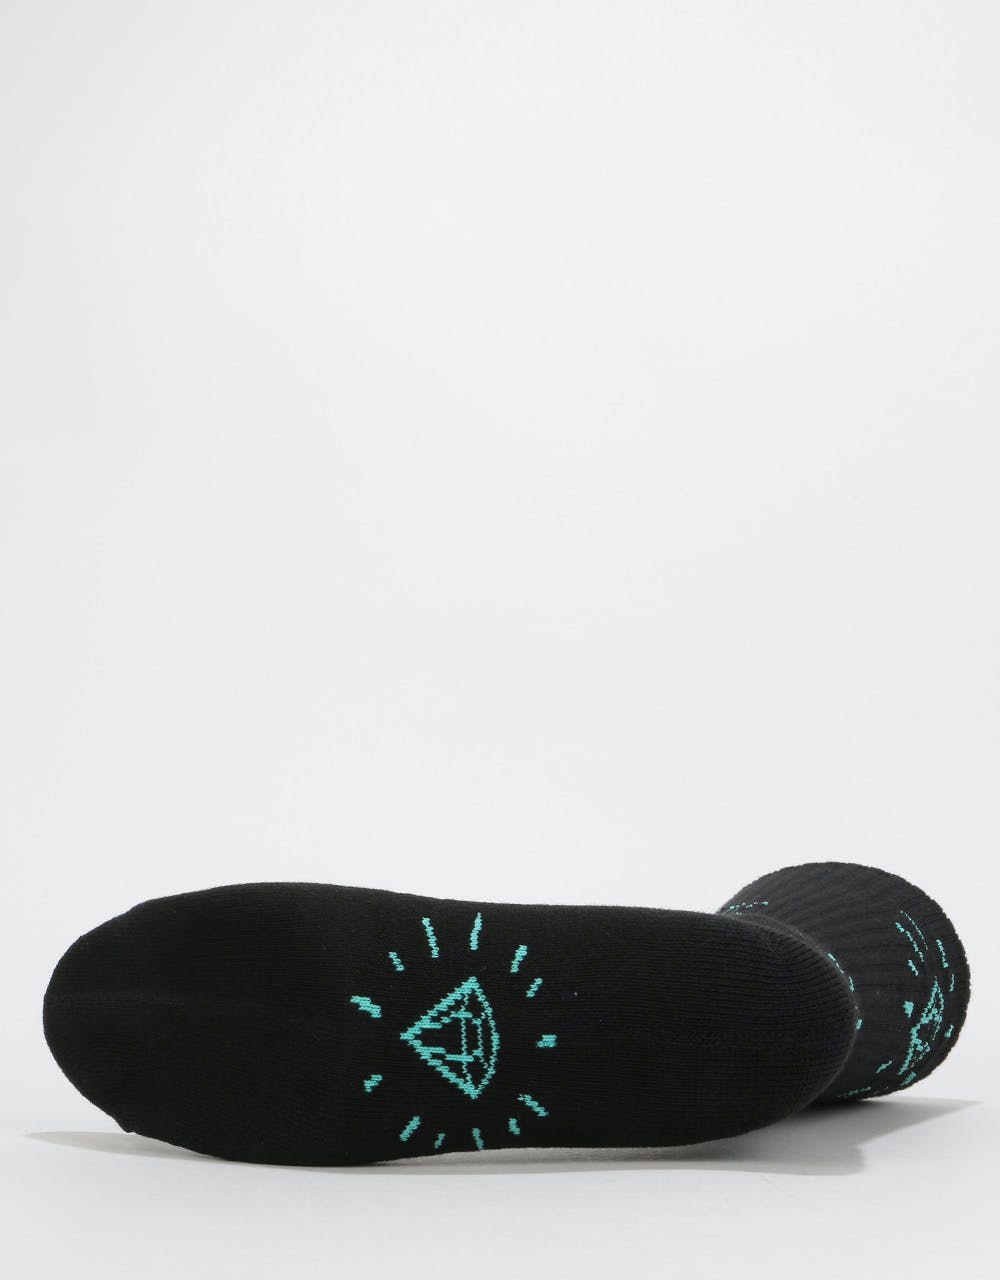 Diamond Supply Co. Outshine Crew Socks - Black